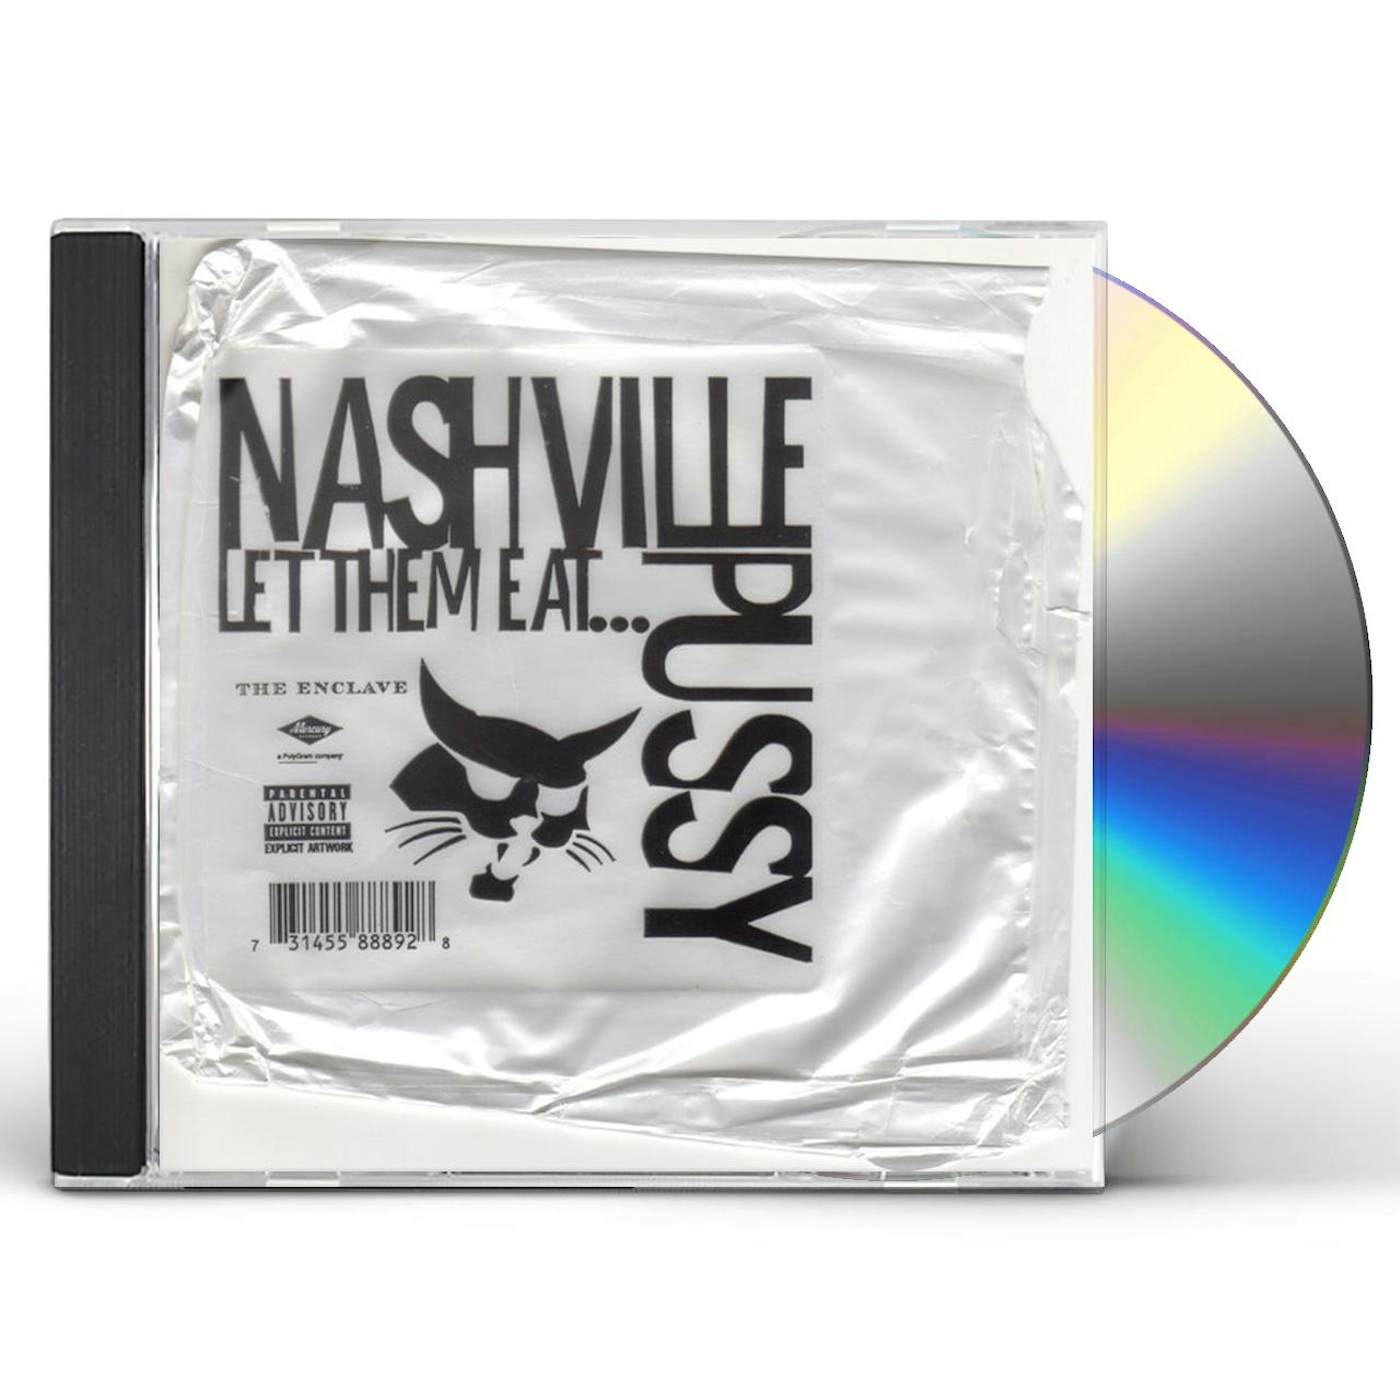 Nashville Pussy LET THEM EAT PUSSY CD